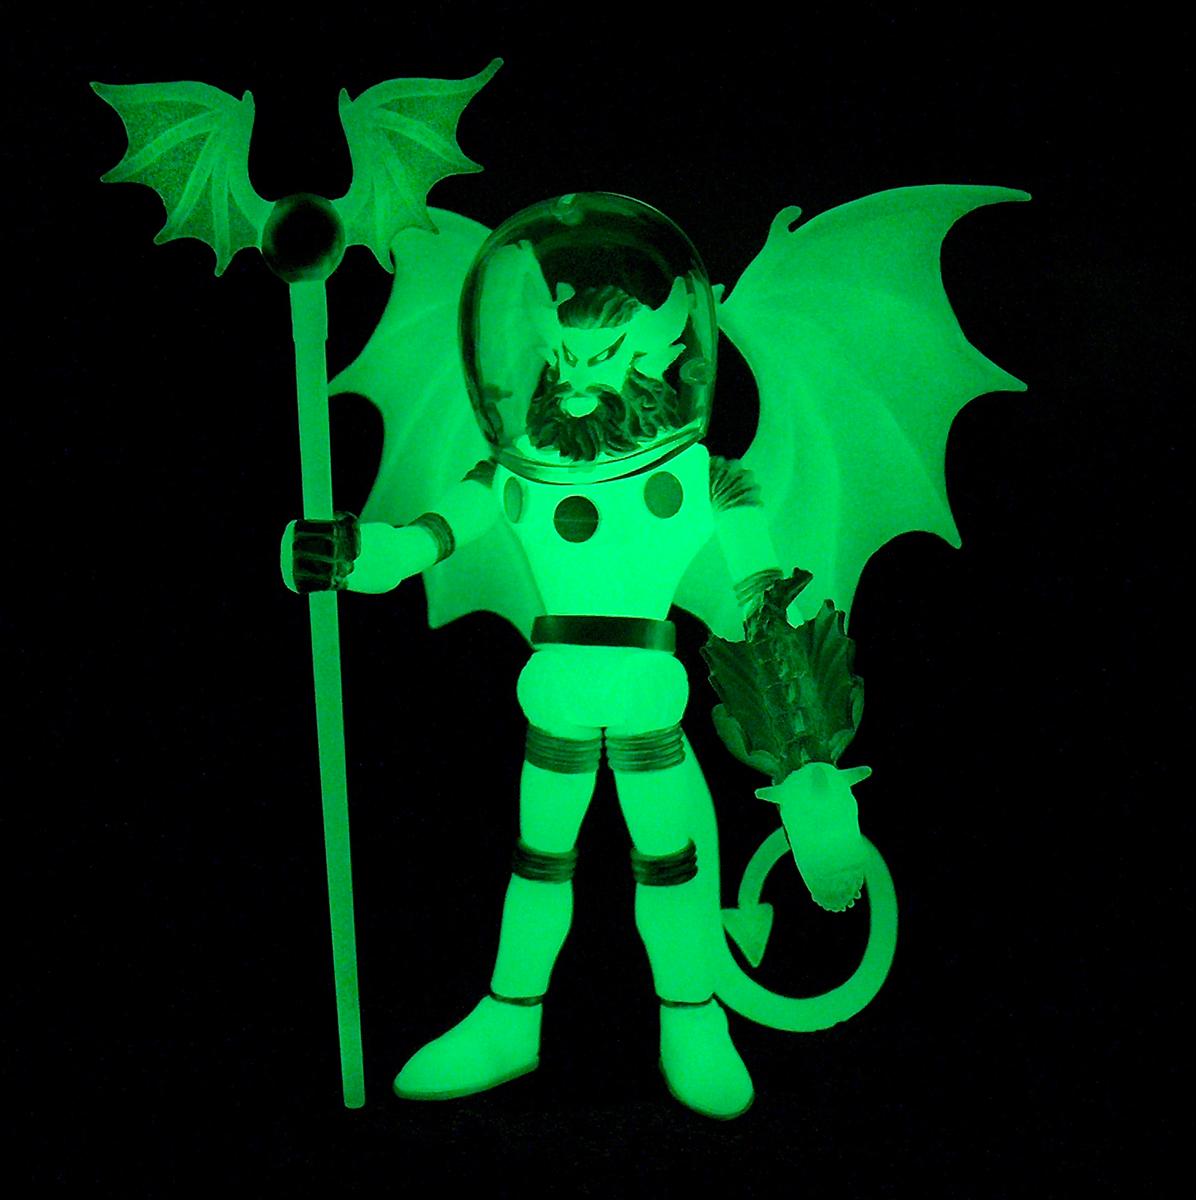 A MYSTRON COSMIC RADIATION glow in the dark figure holding a bat.